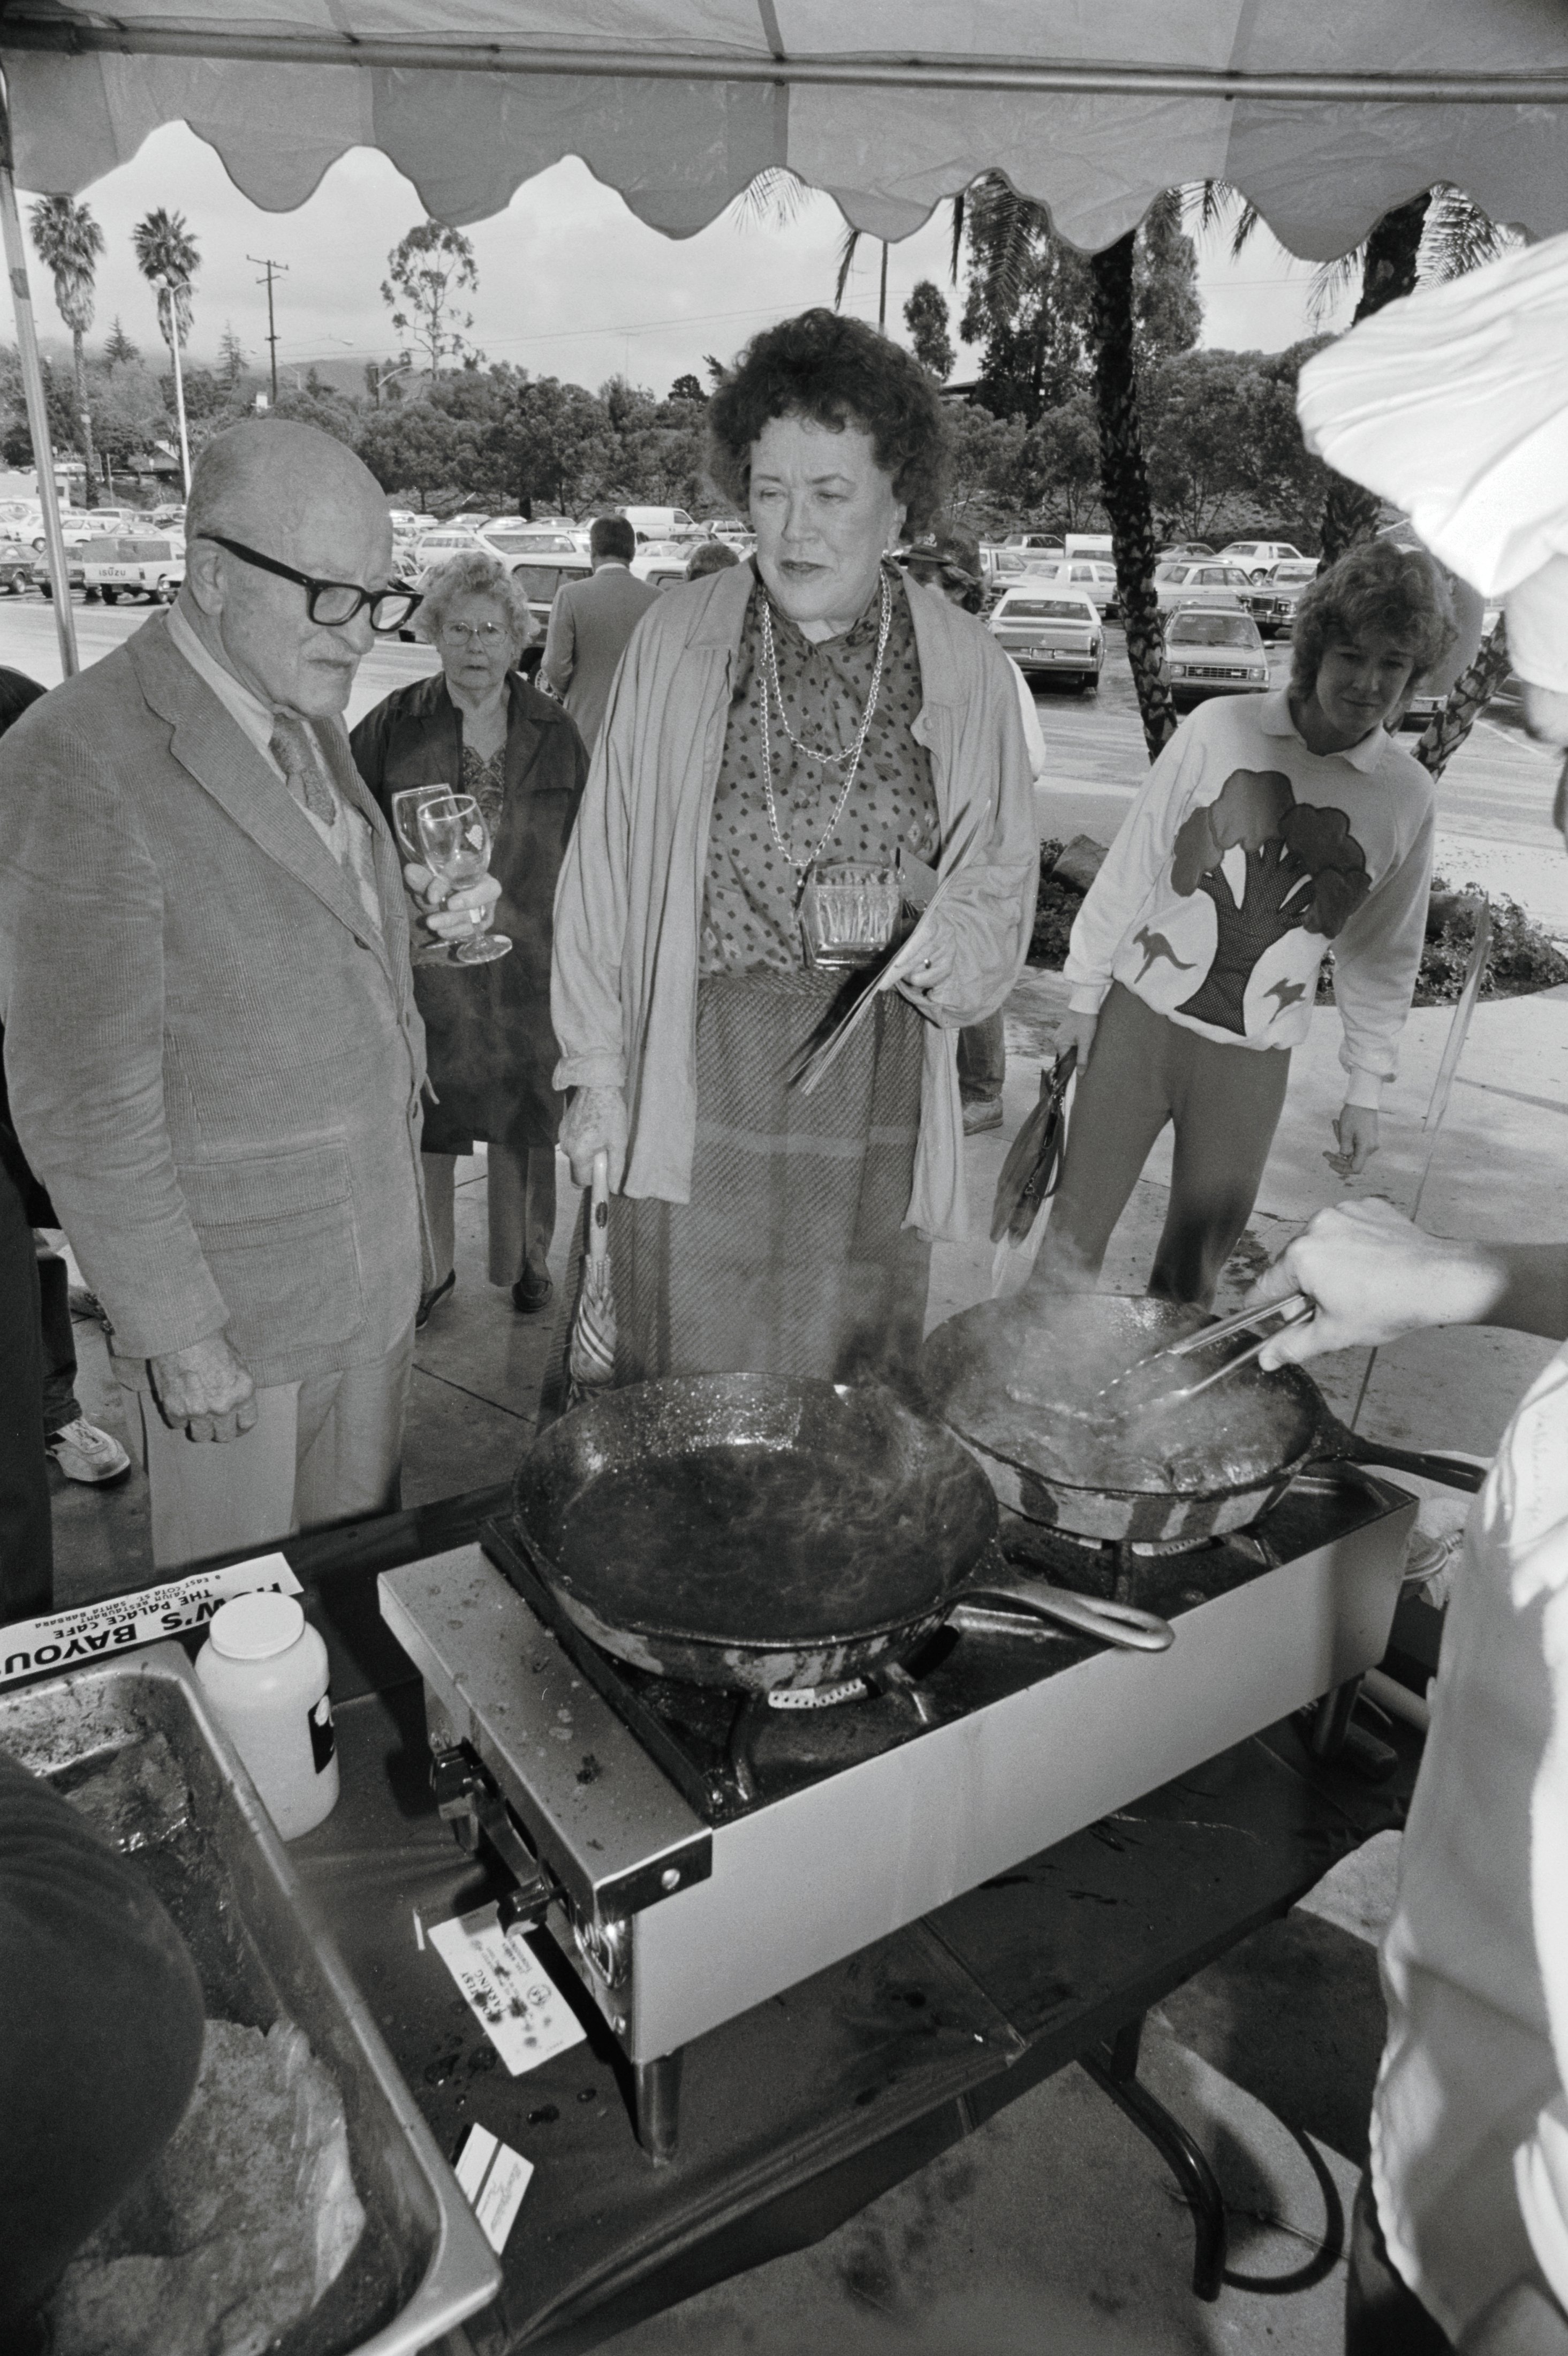 Julia Child accompanied by Paul Child, mingles at a Santa Barbara food festival in Santa Barbara, California. 